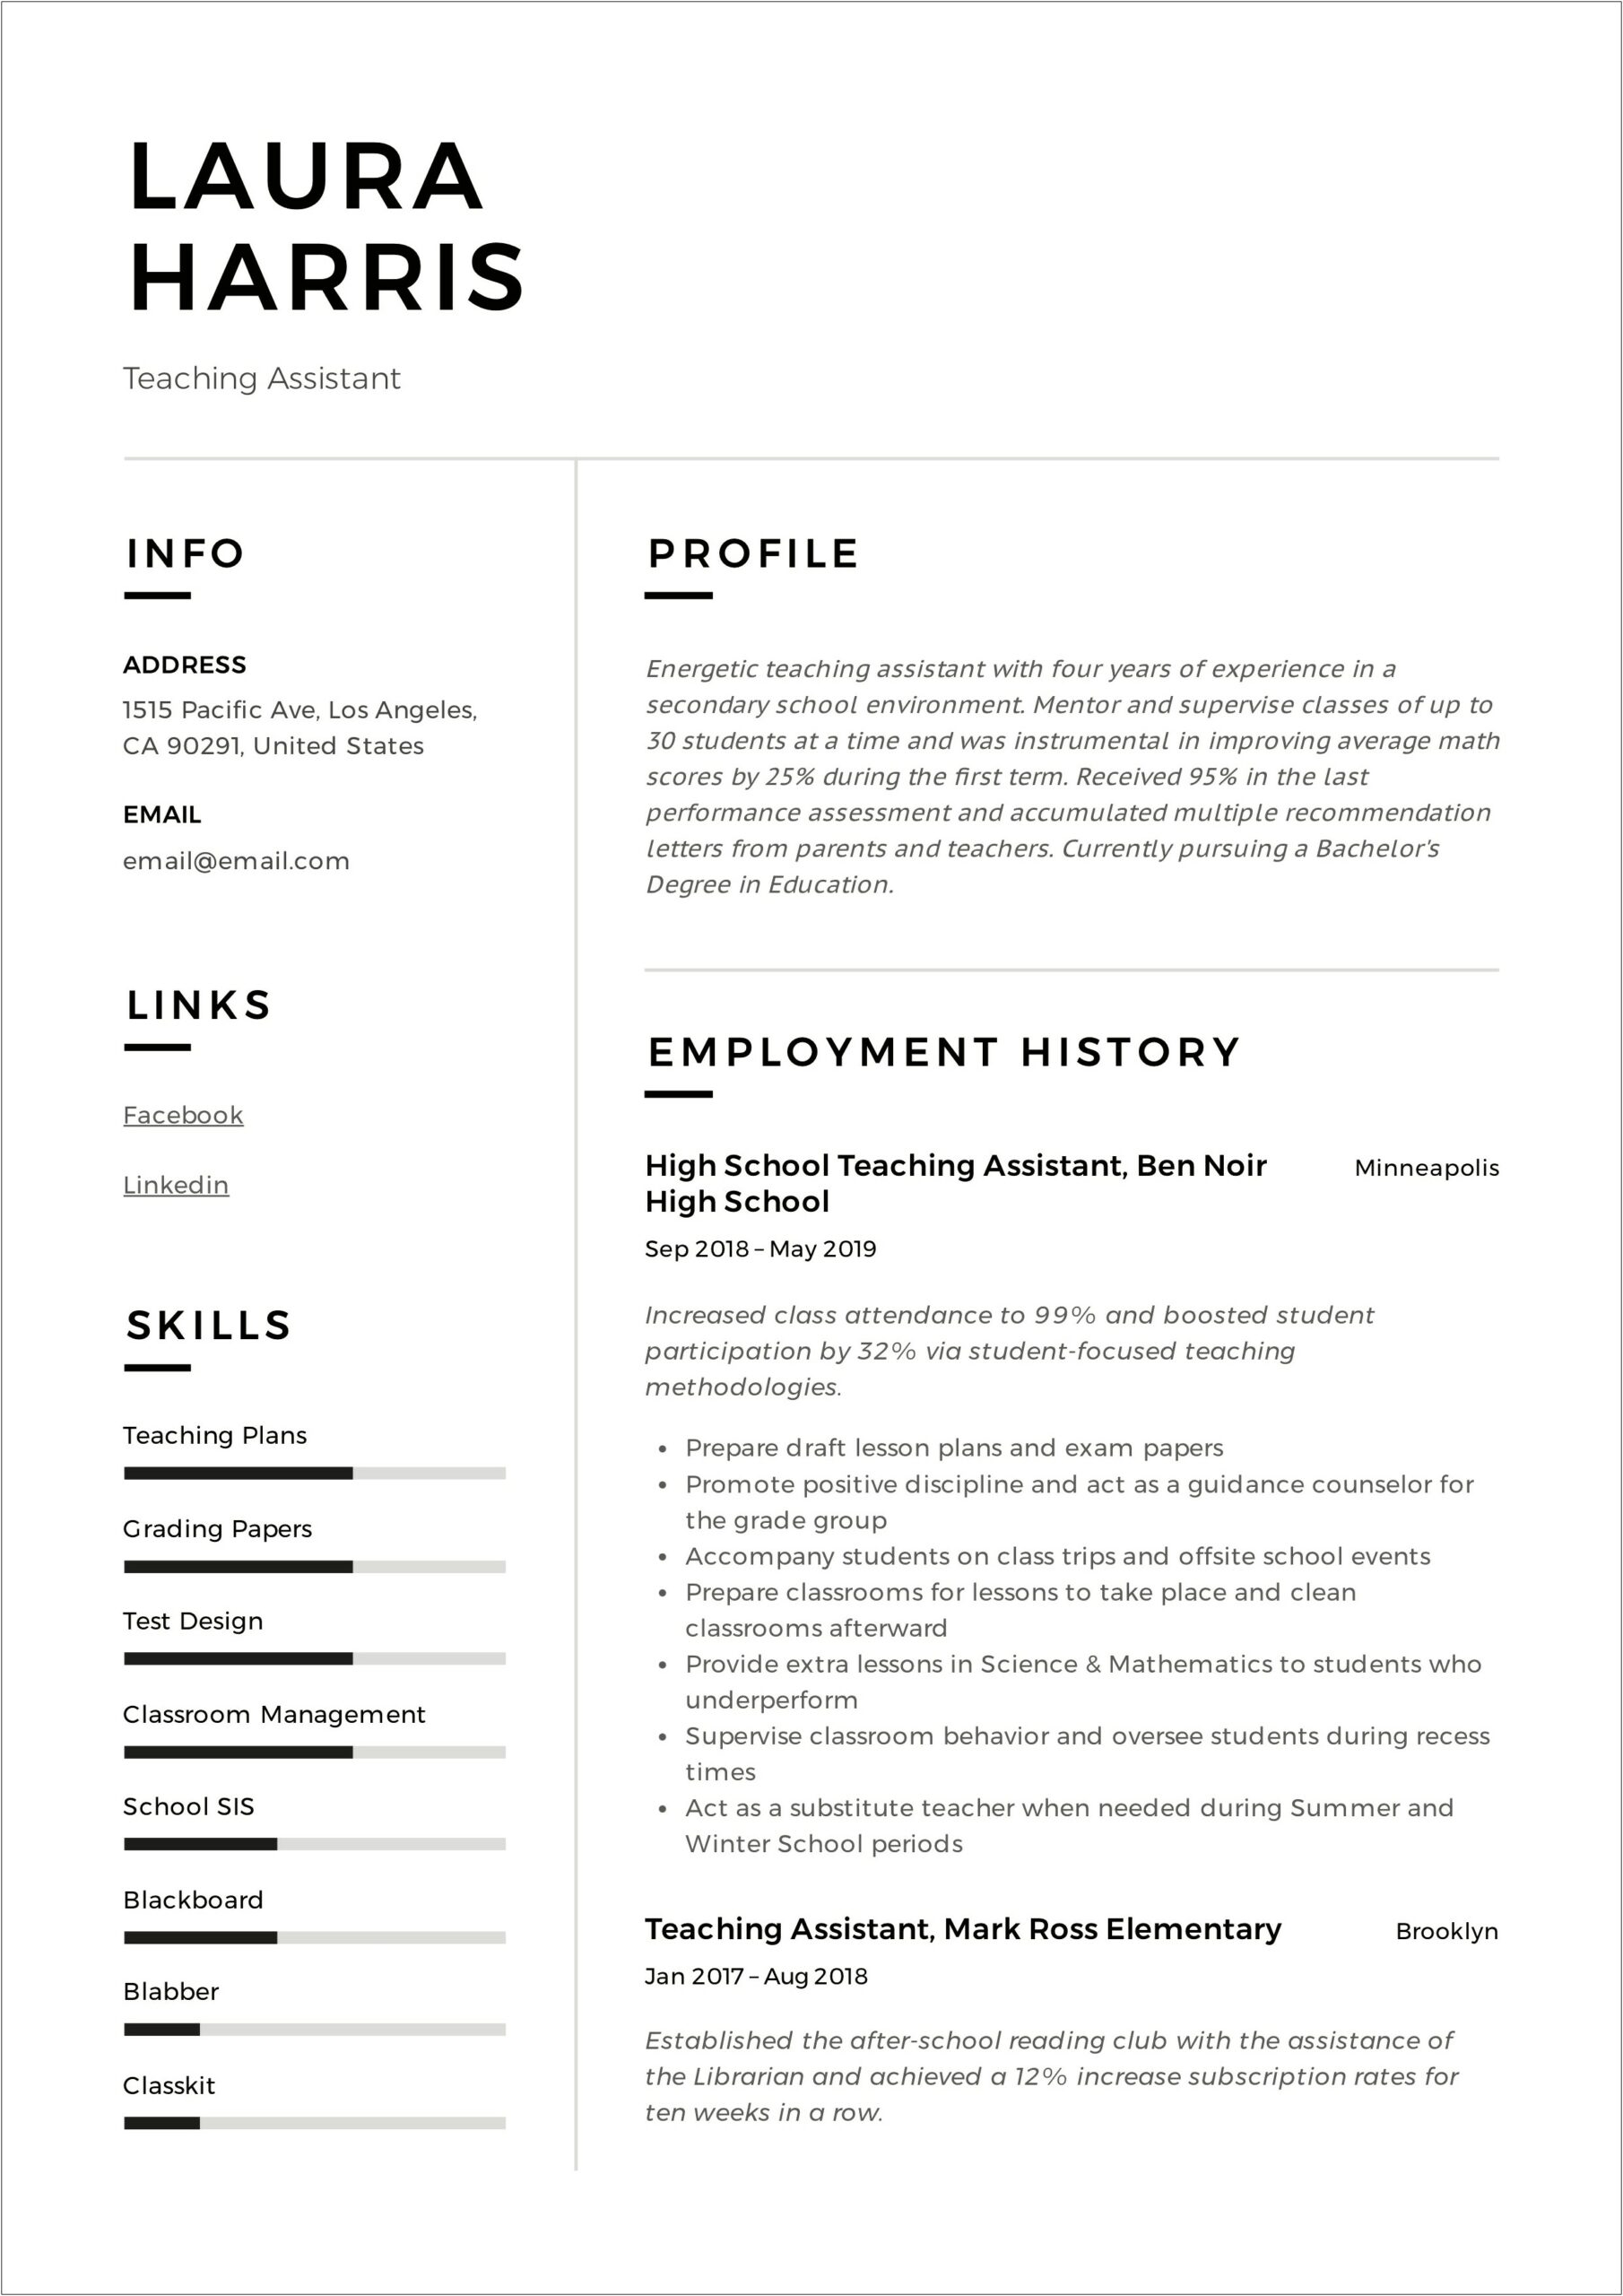 School Aide Job Description For Resume